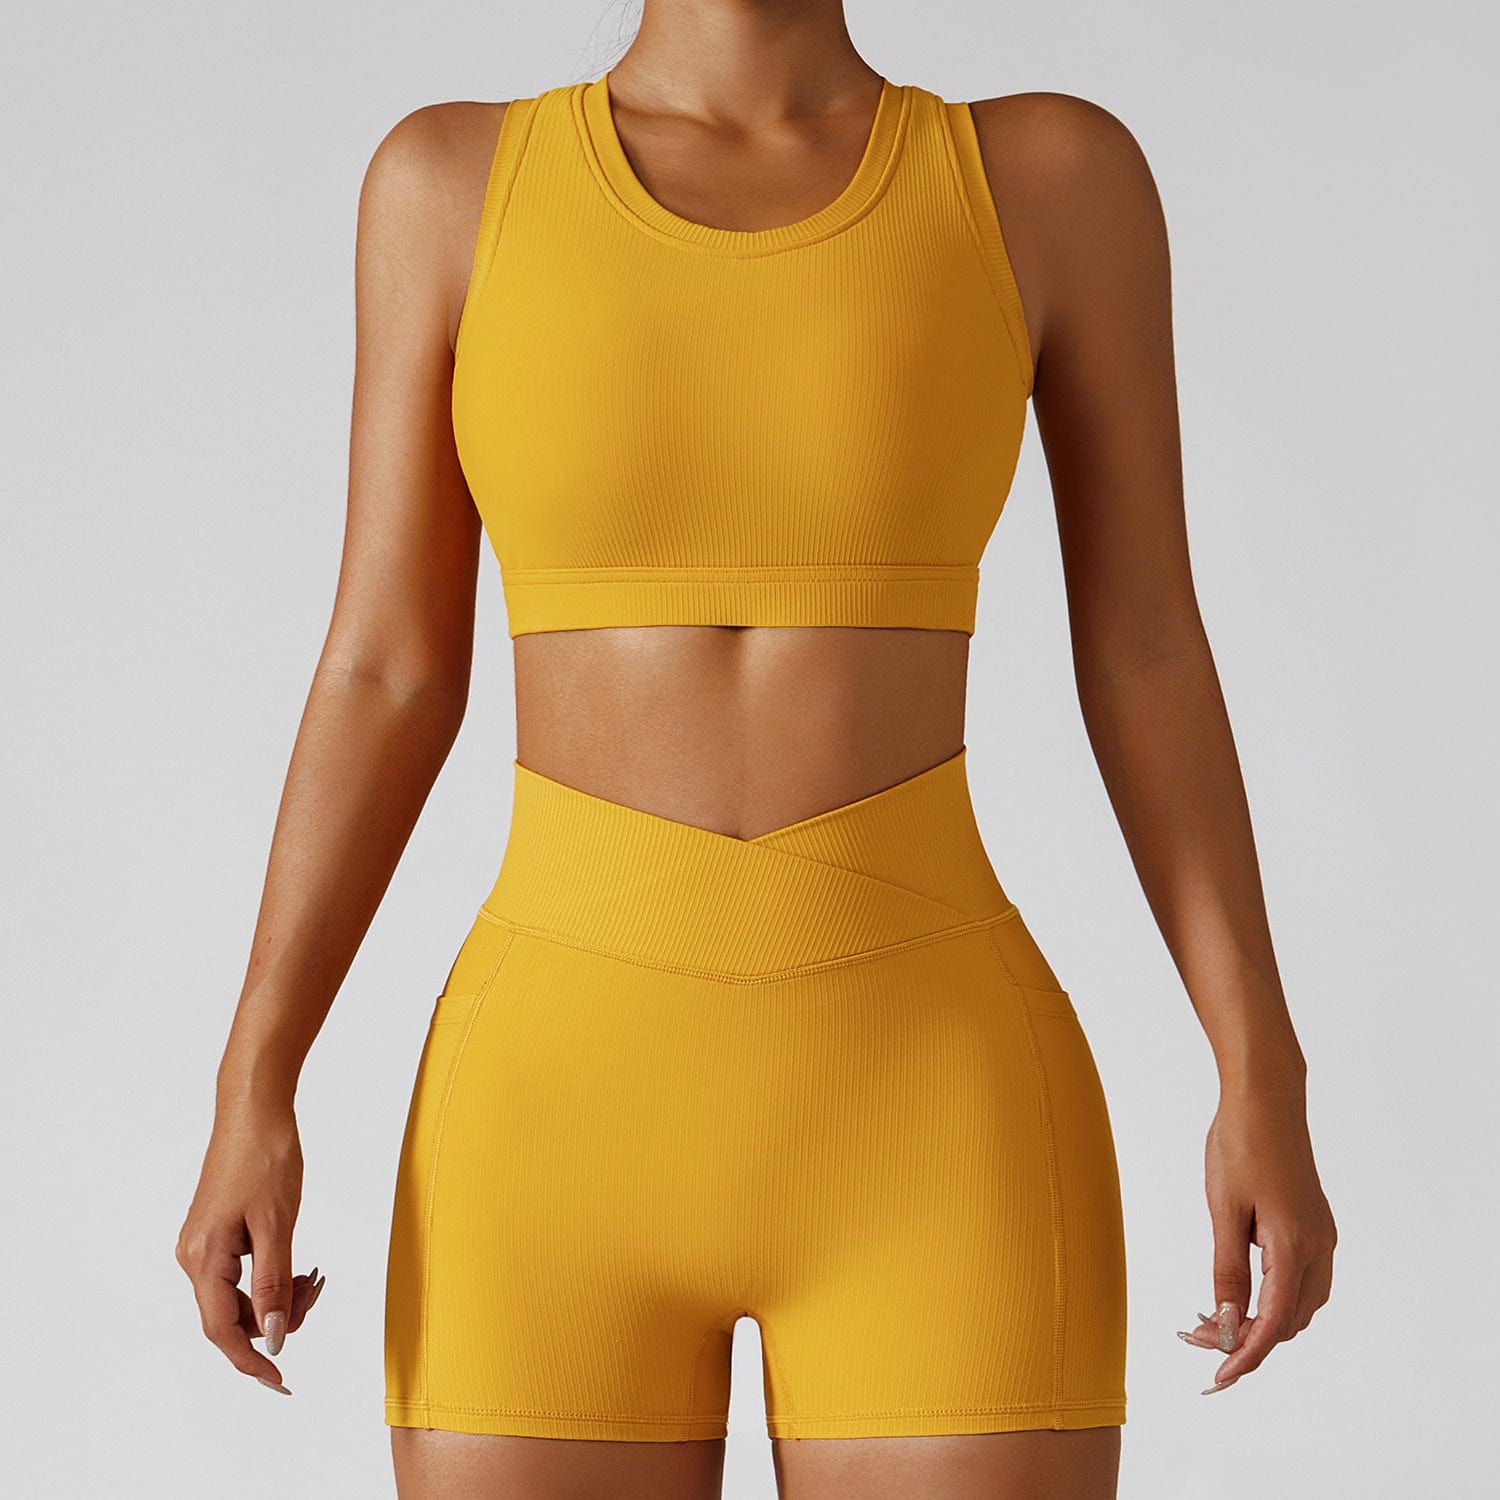 InnateFit FITNESS Curry yellow / Tank shorts / S Women's Running Fitness Suit Yoga Clothes CJTZ156149317QJ